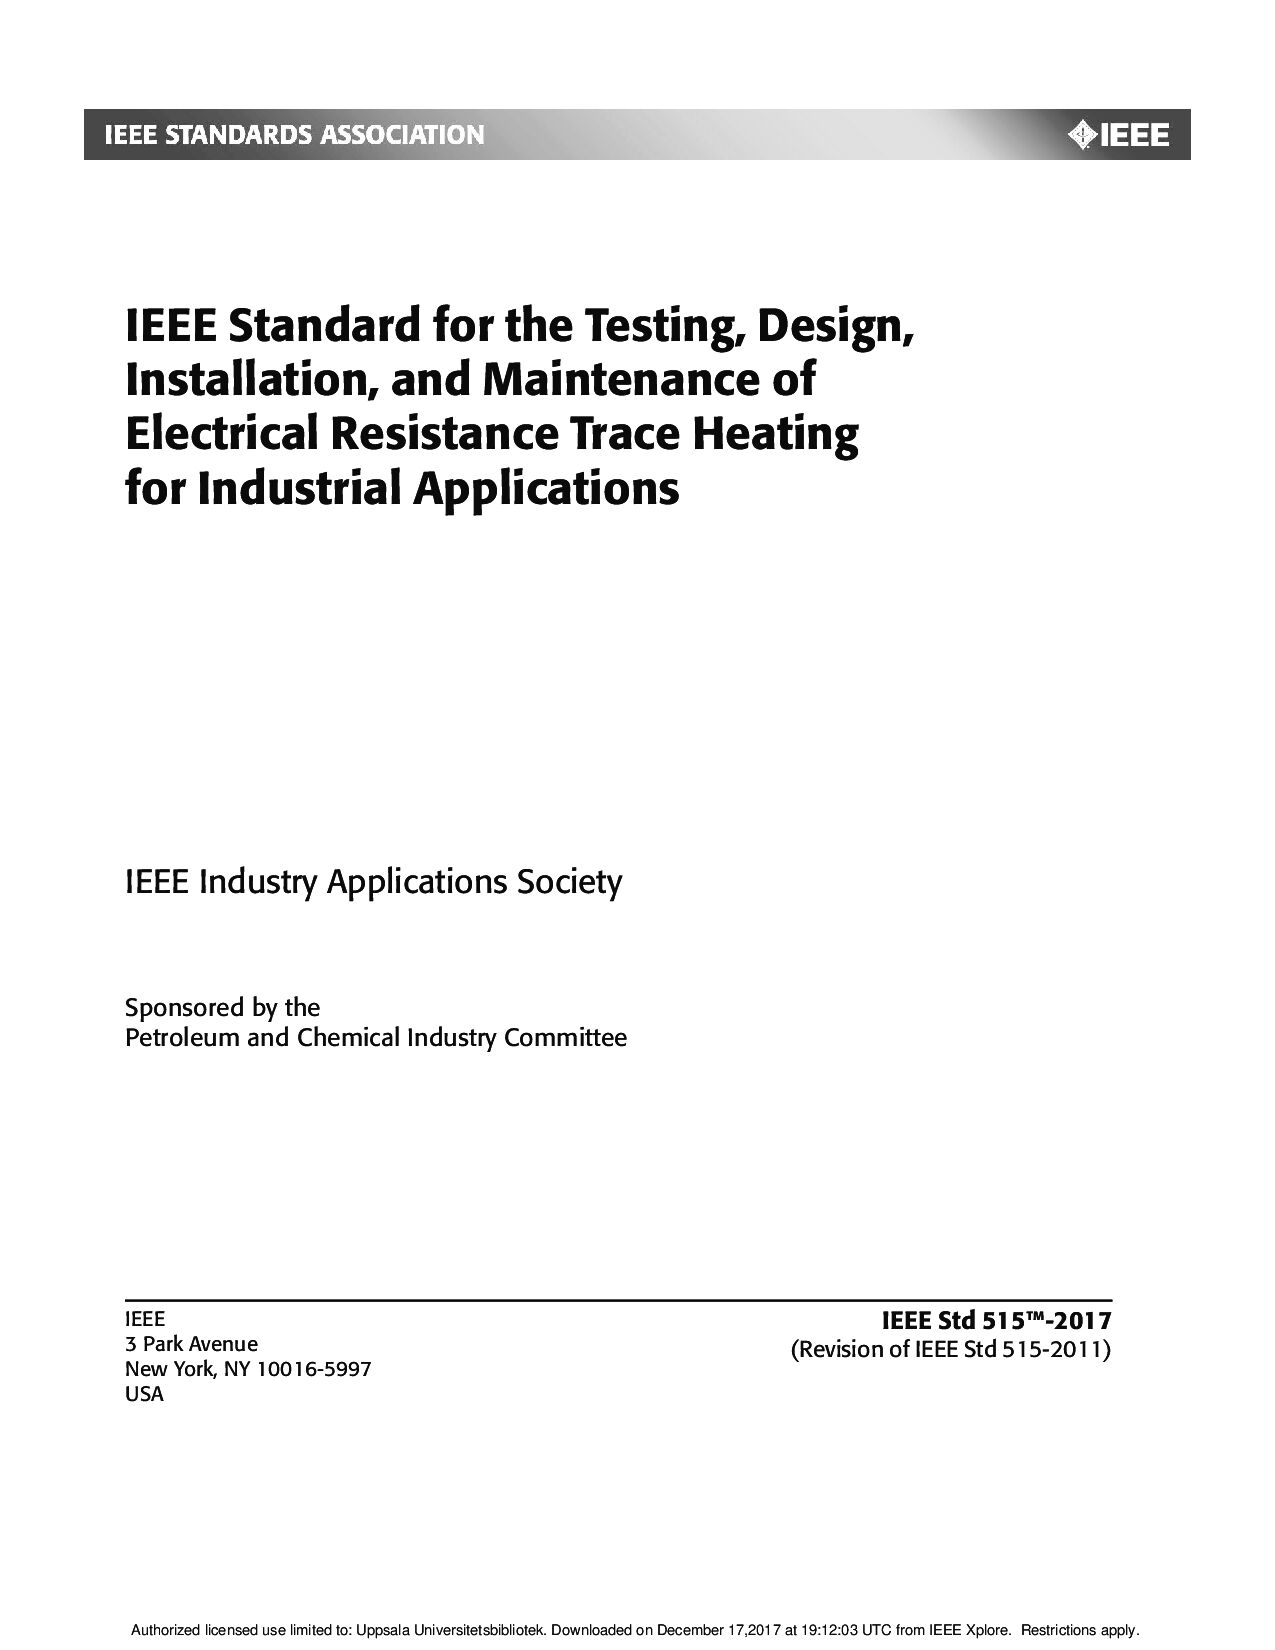 IEEE Std 515-2017